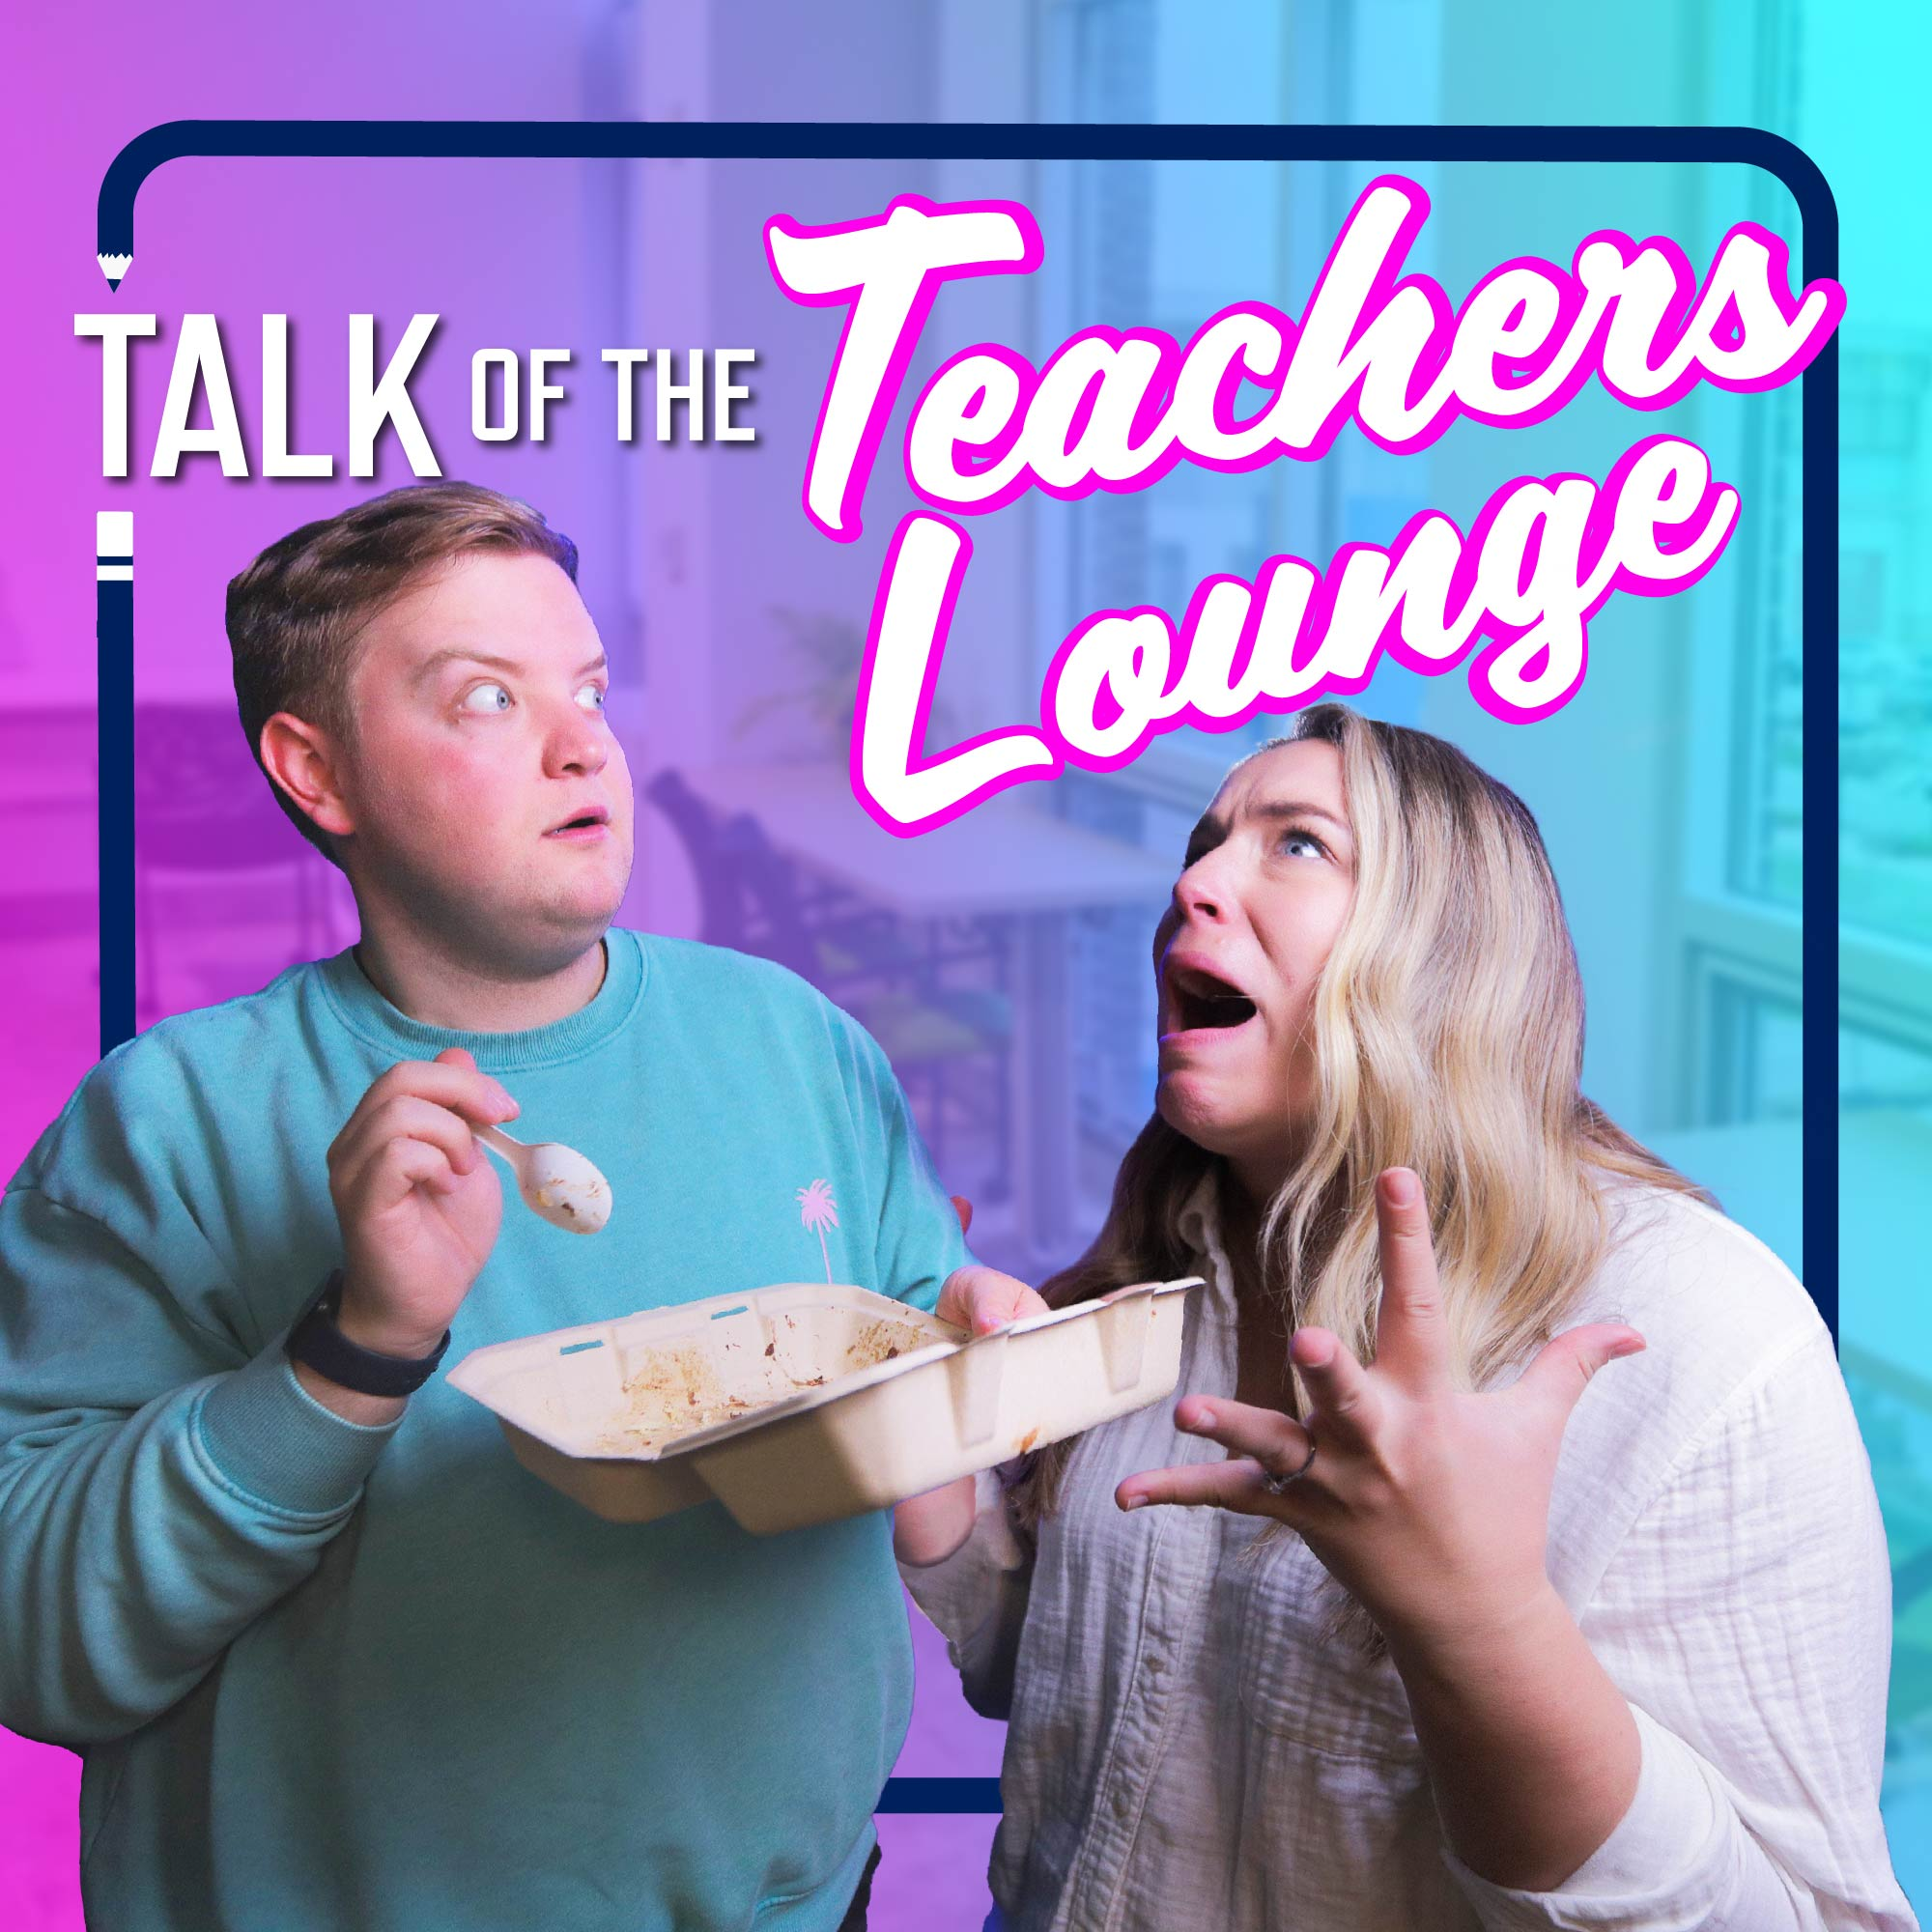 The Talk of the Teachers’ Lounge